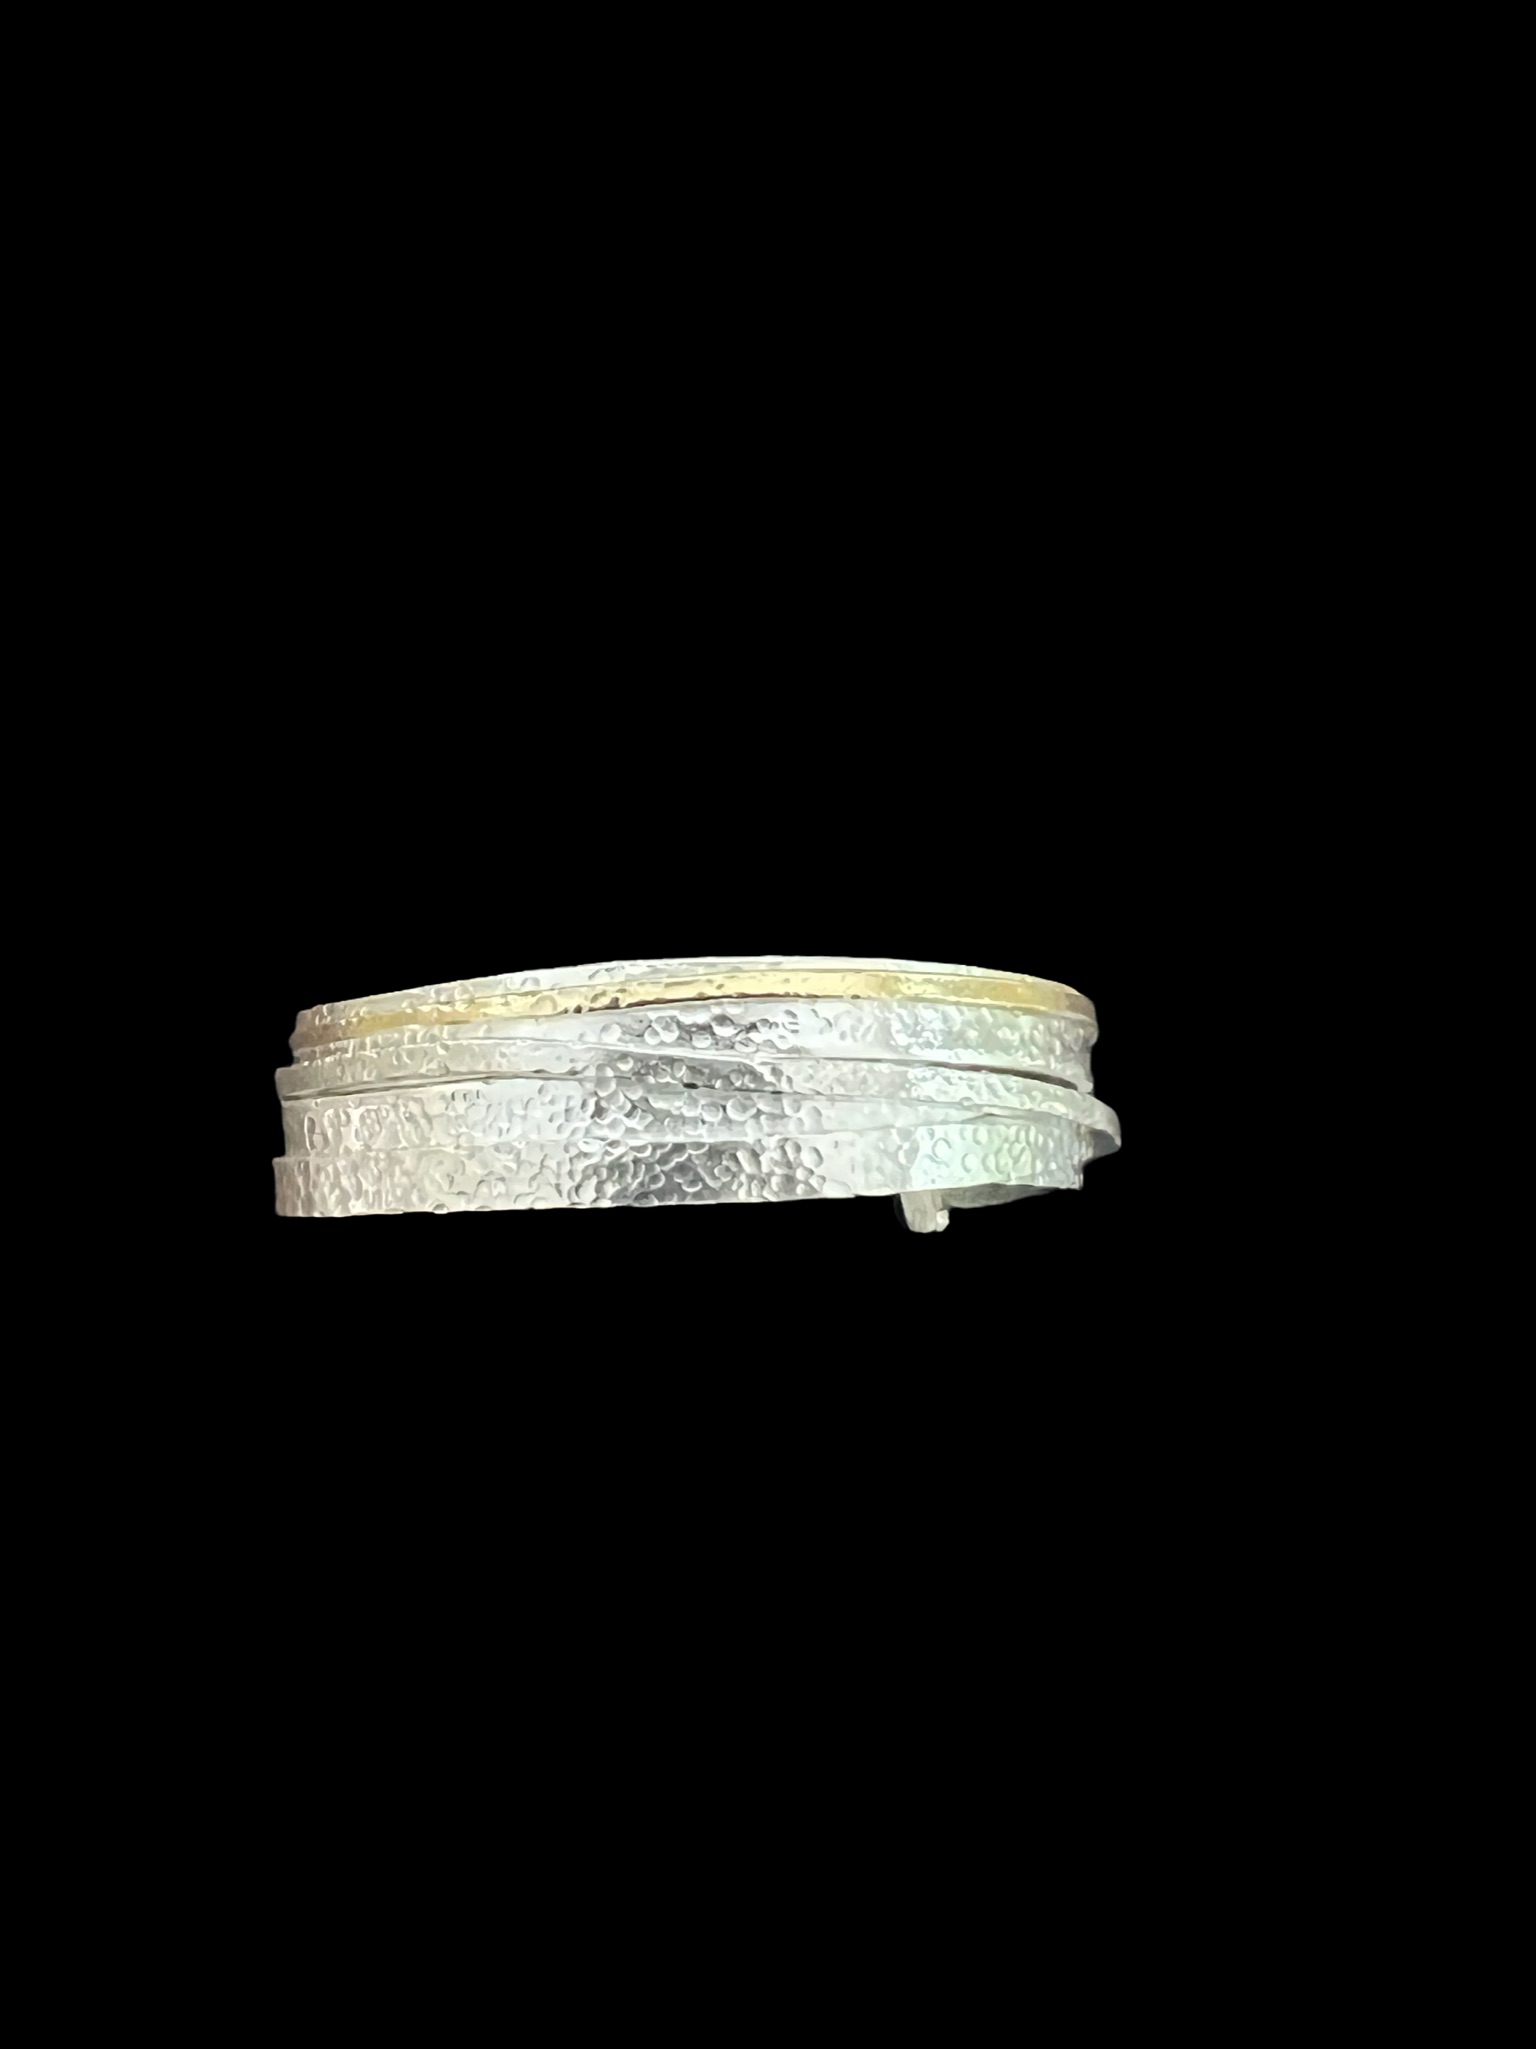 Sterling silver crossover bracelet with 18k gold